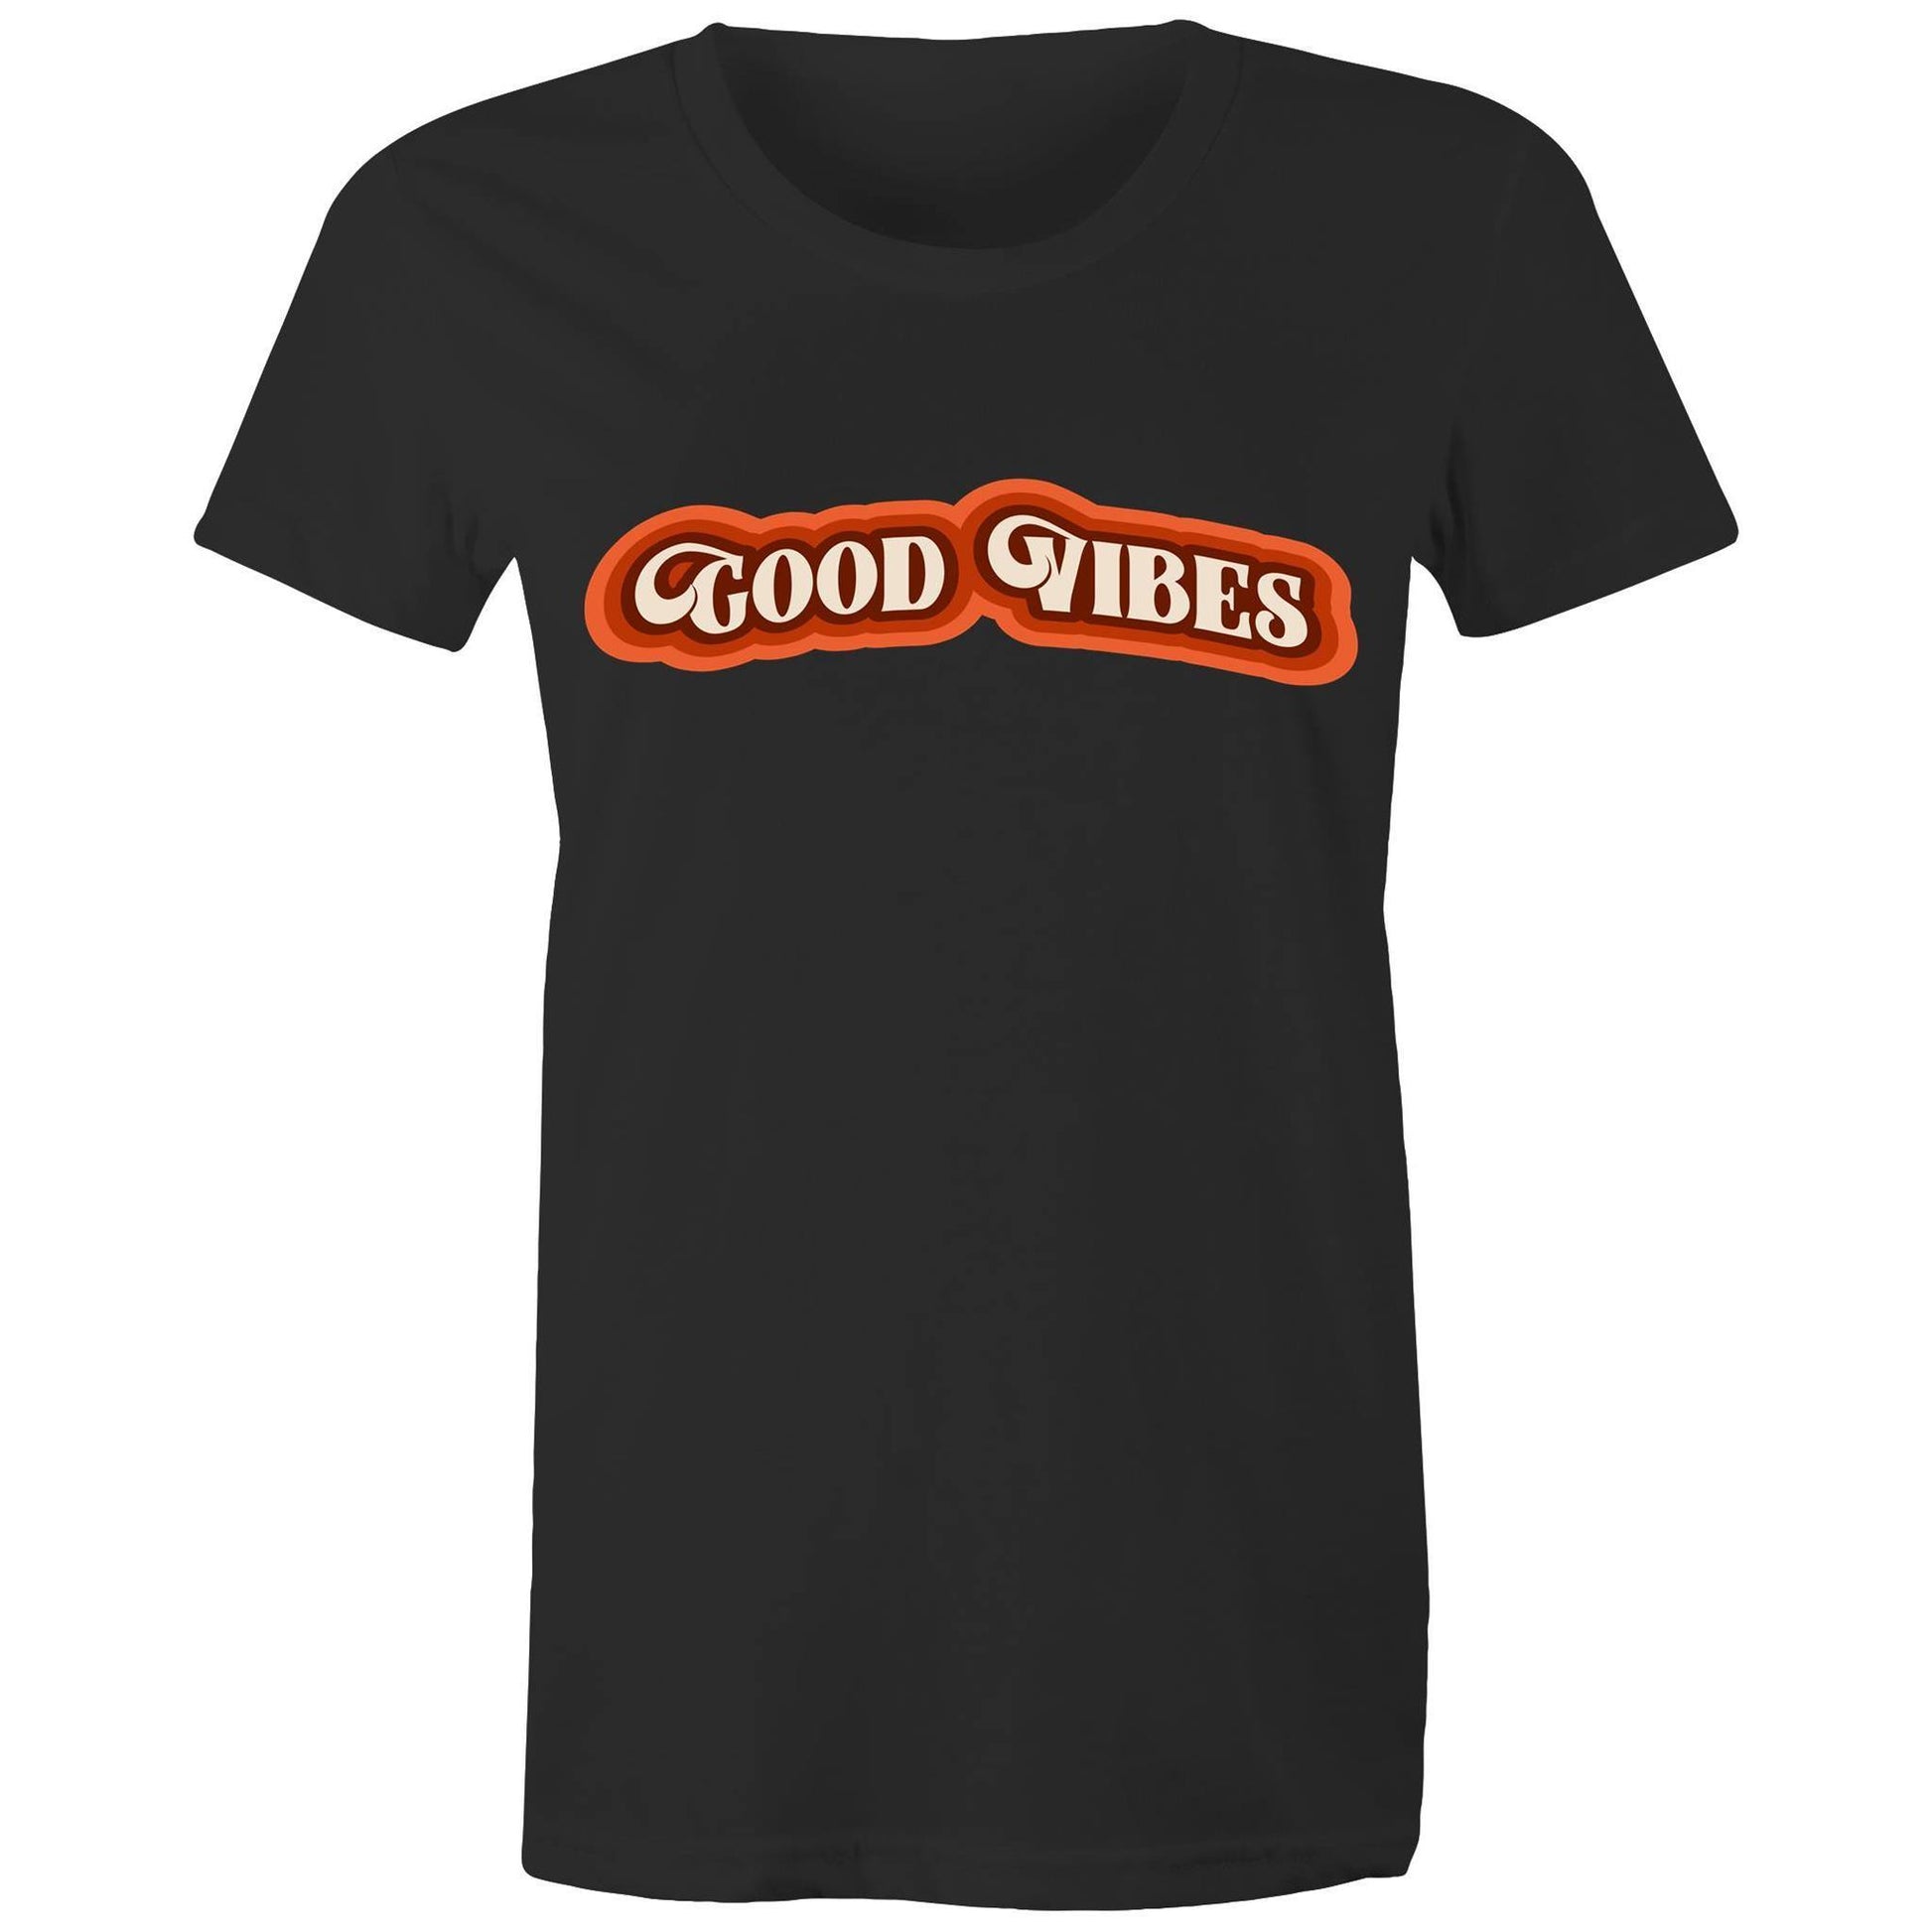 Good Vibes - Women's T-shirt Black Womens T-shirt Retro Womens